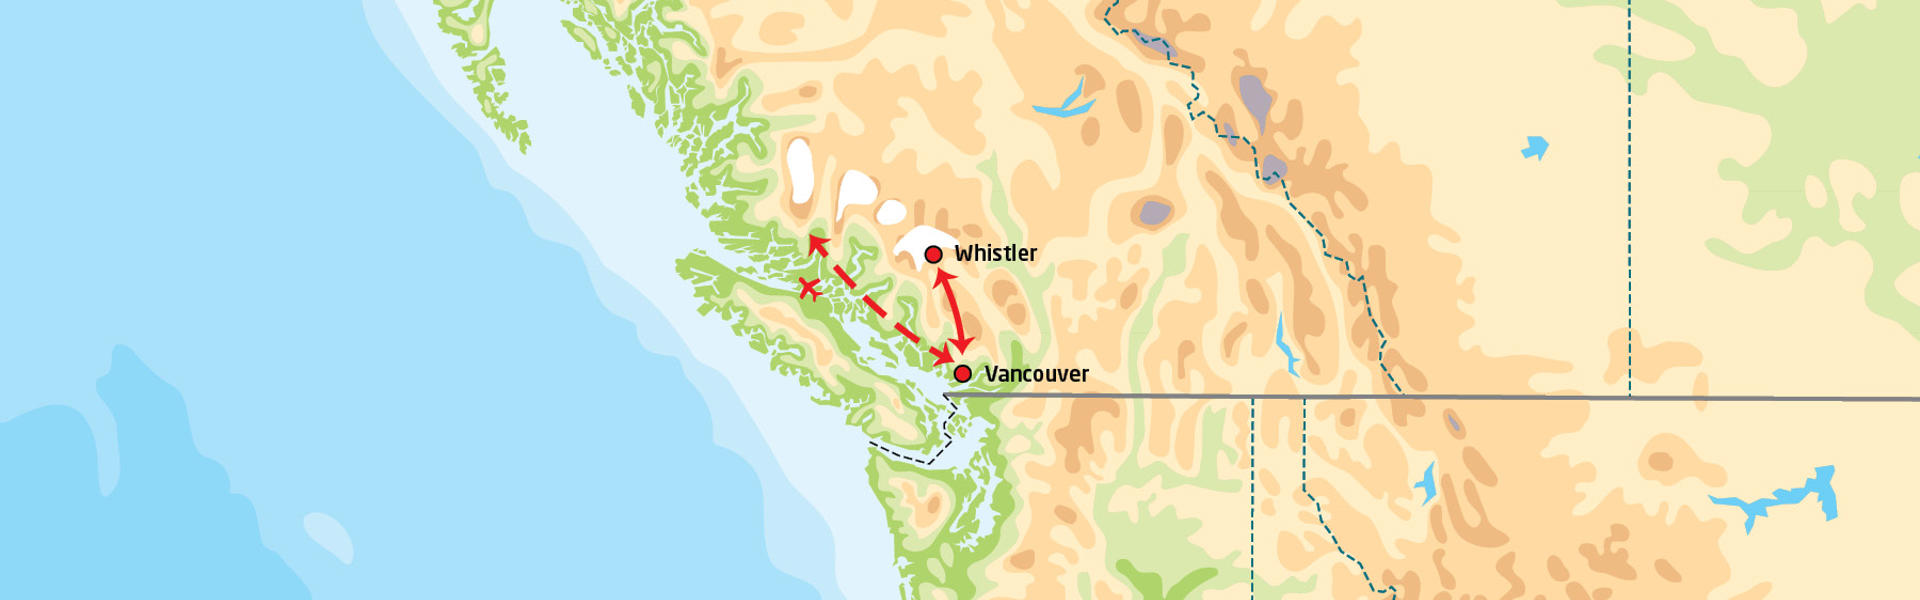 Skiferie i Whistler - Canada | Reiserute